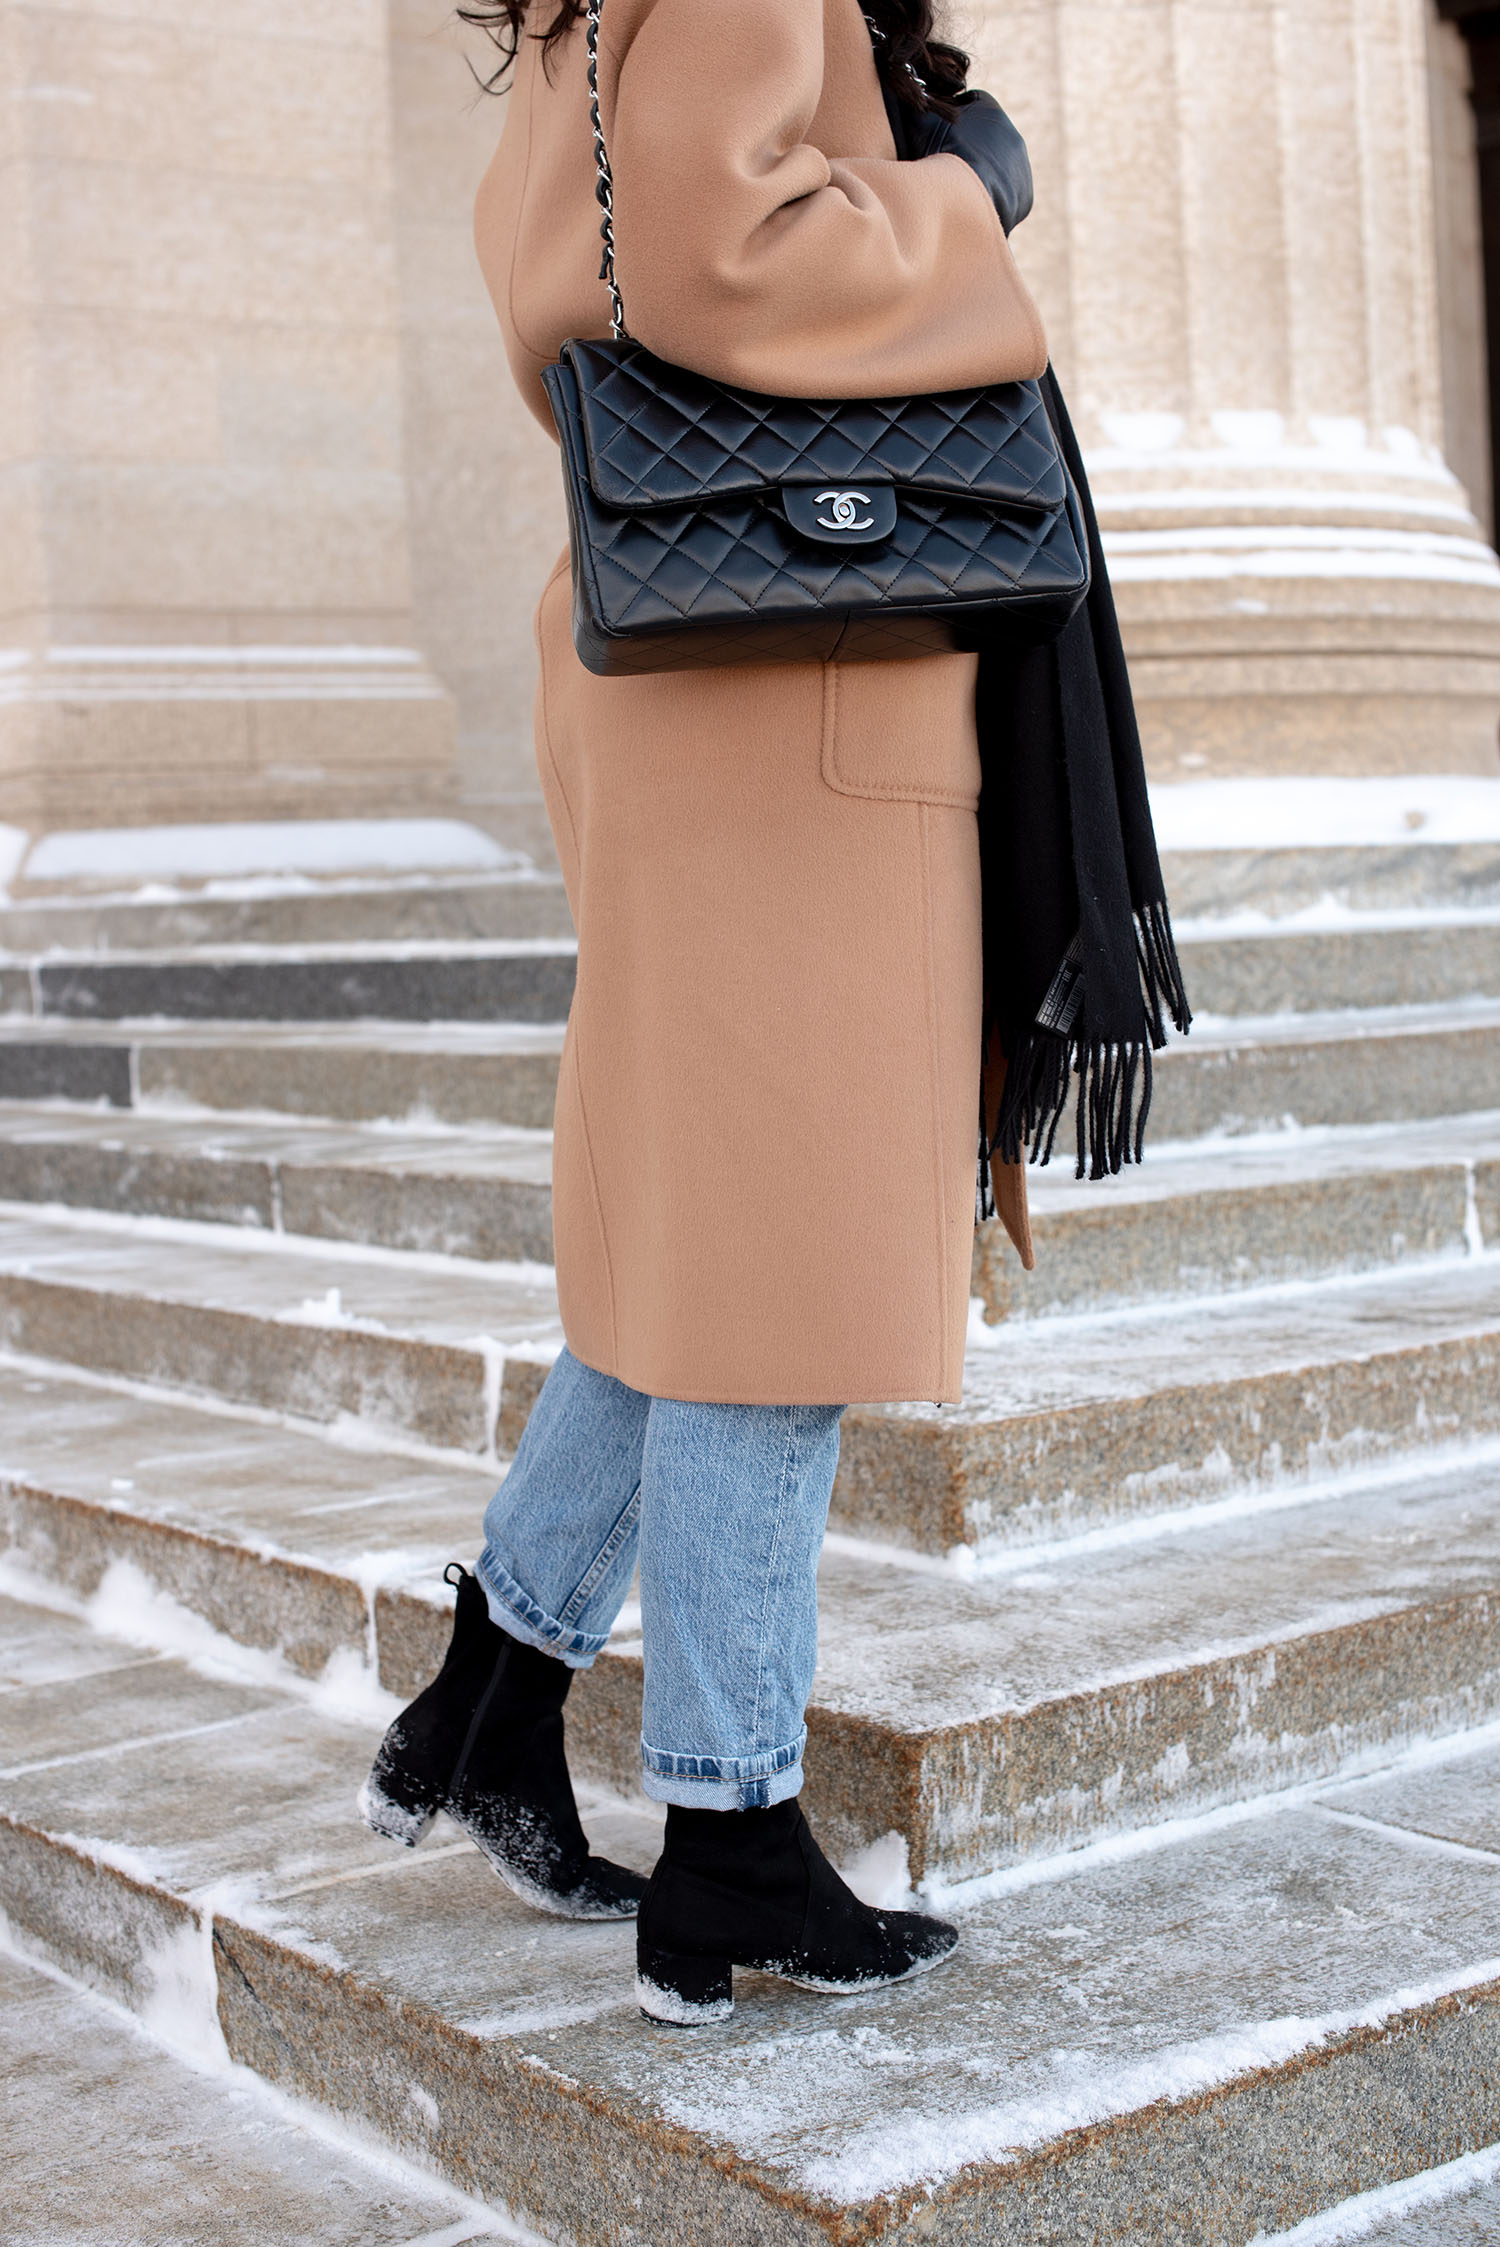 Coco & Vera - Chanel handbag, Aldo boots, The Curated coat